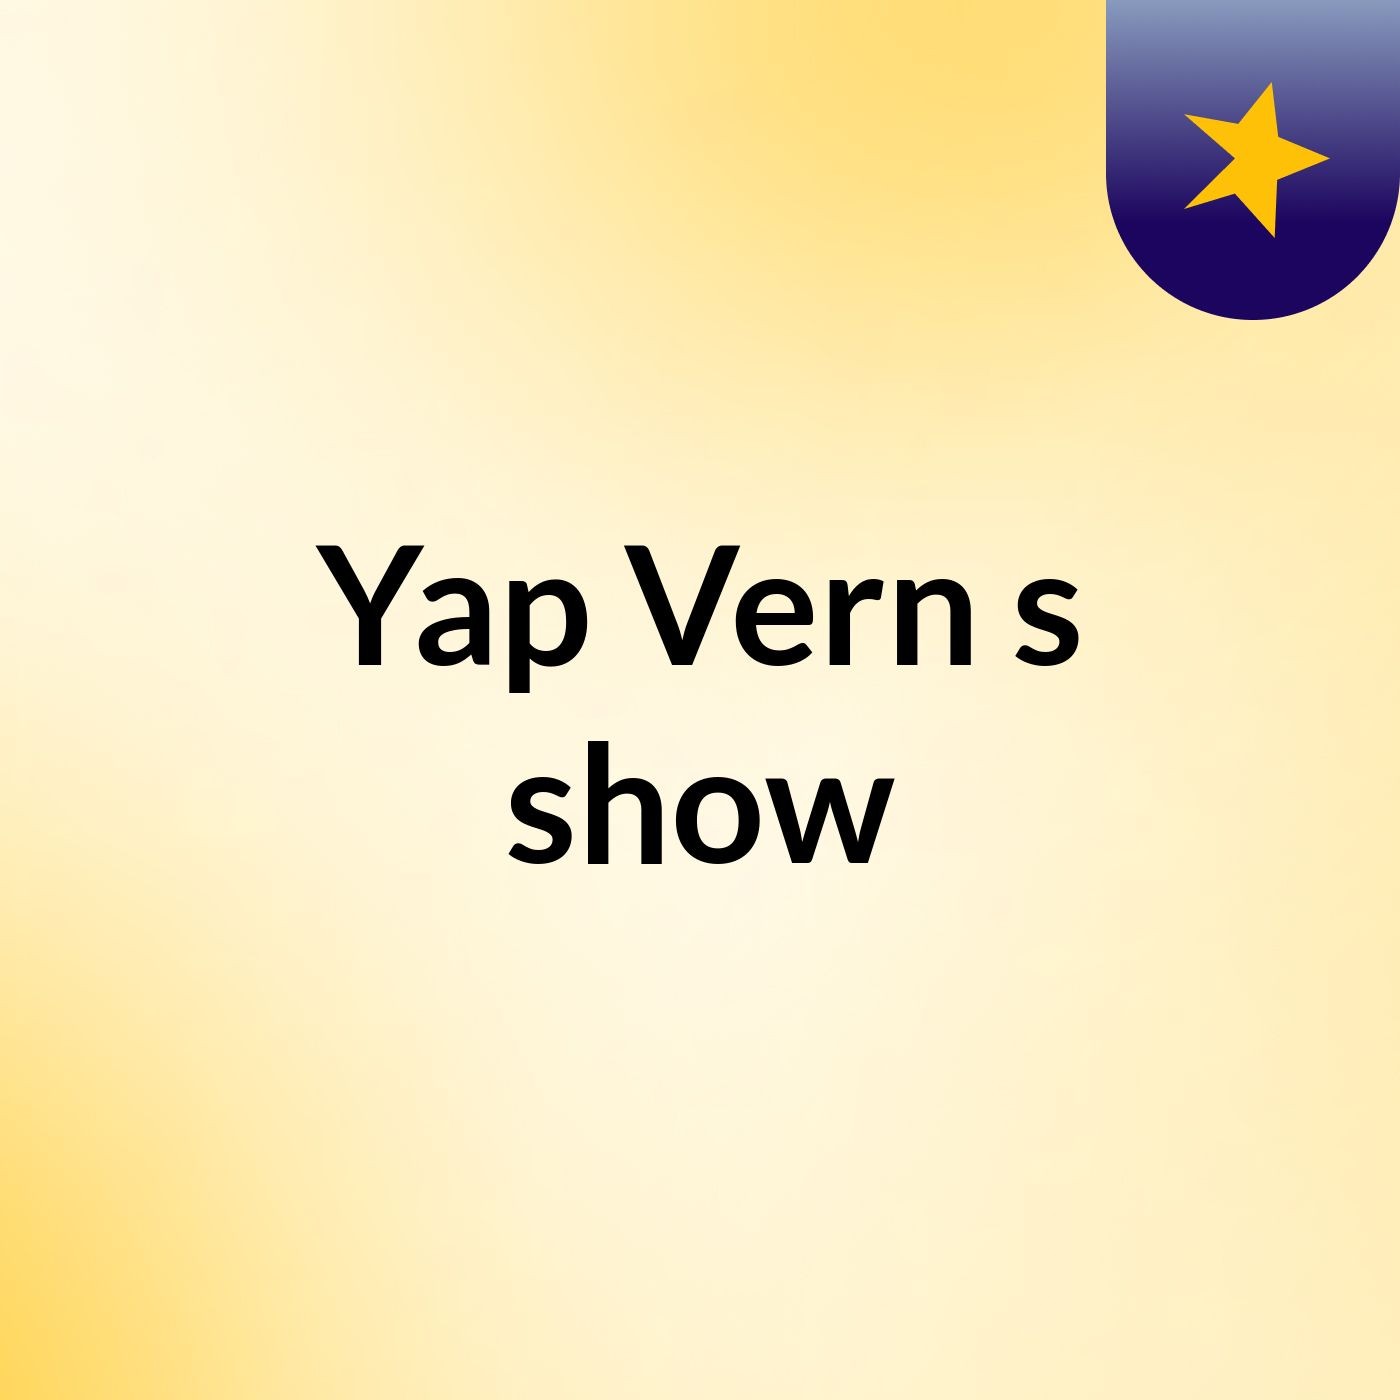 Yap Vern's show